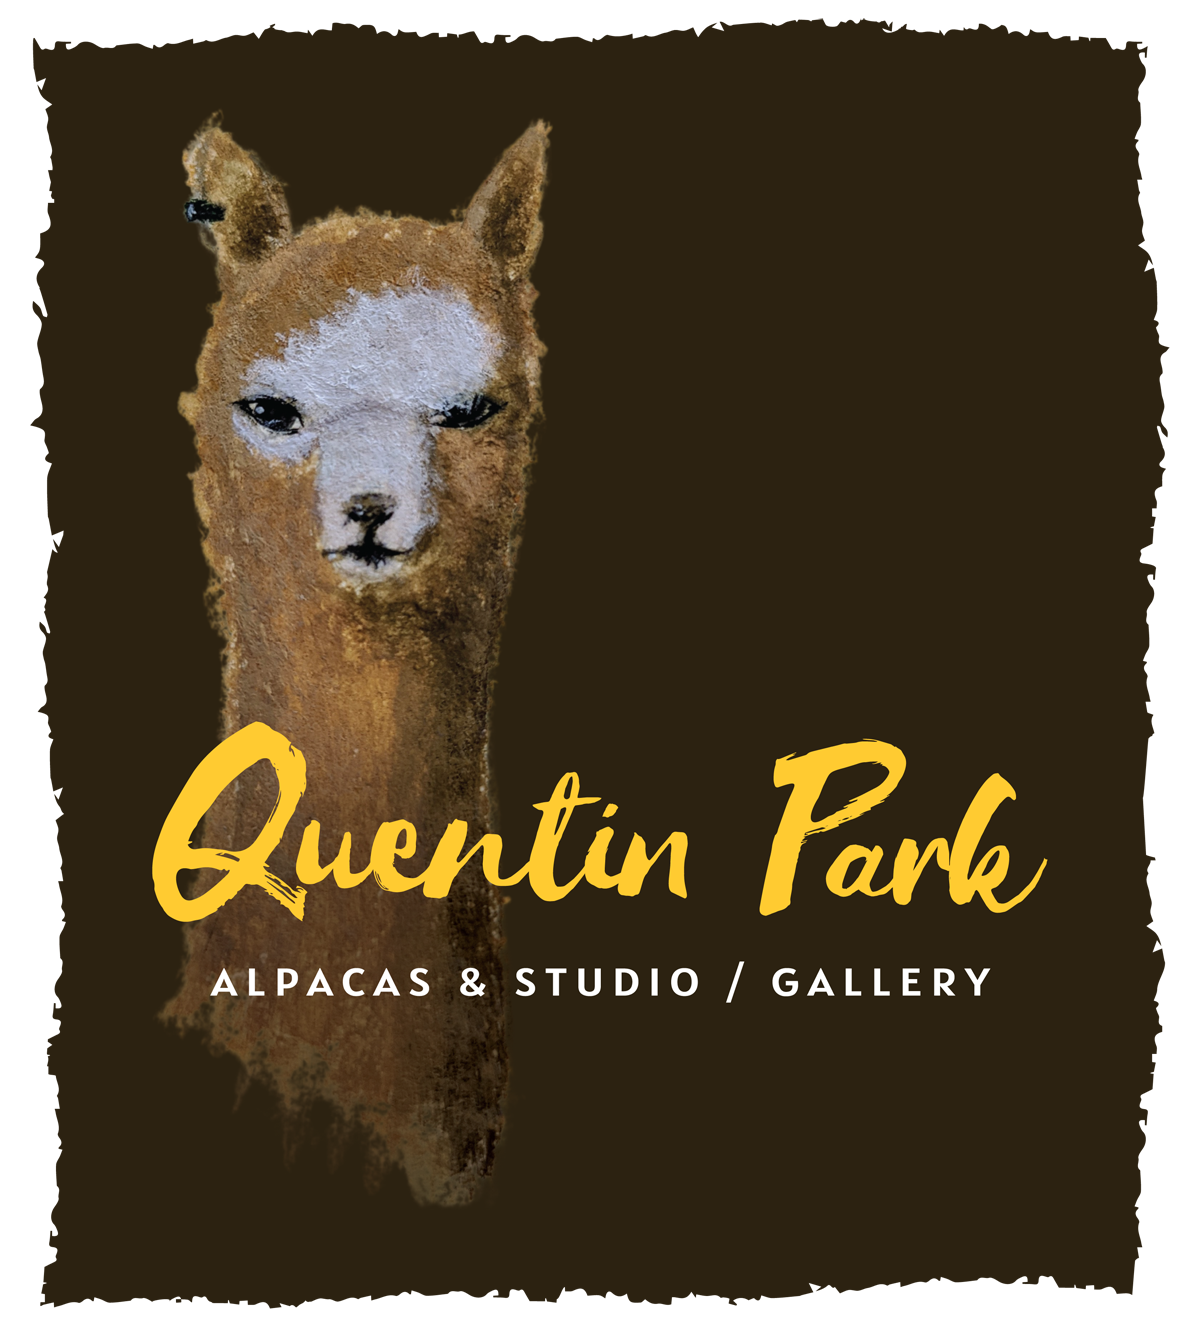 Quentin Park Alpacas & Studio Gallery